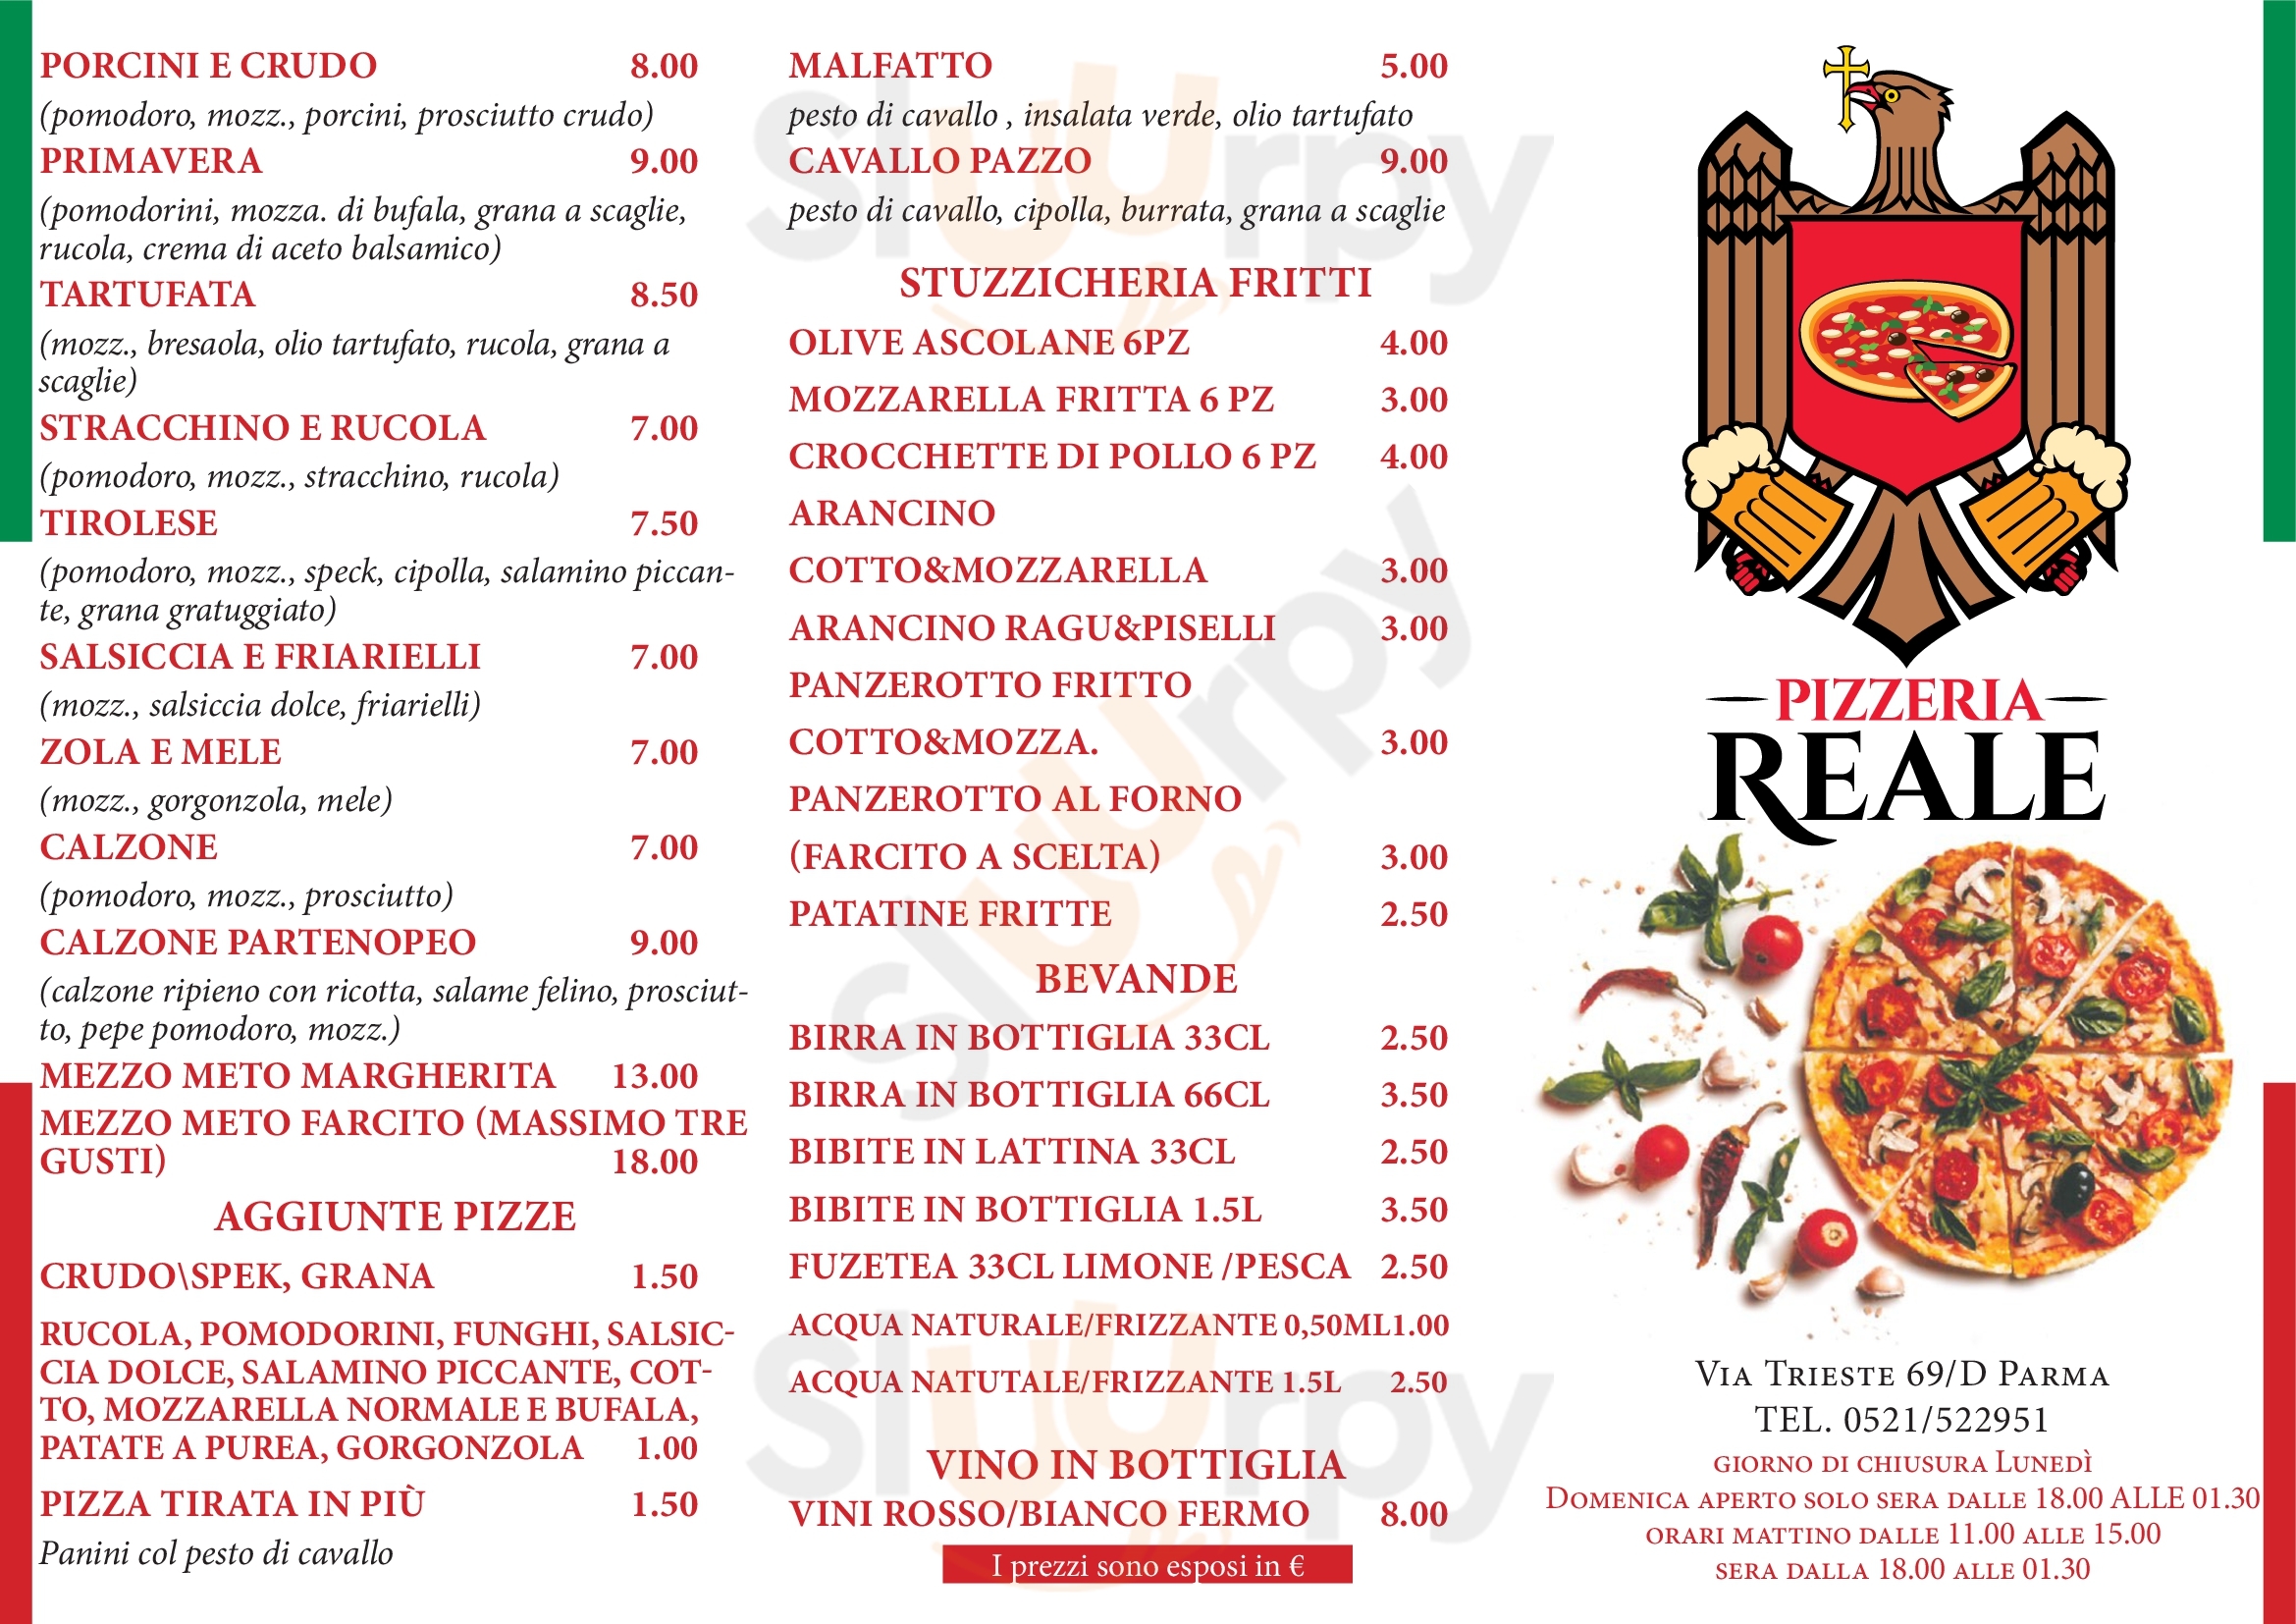 Pizzeria Reale Parma menù 1 pagina